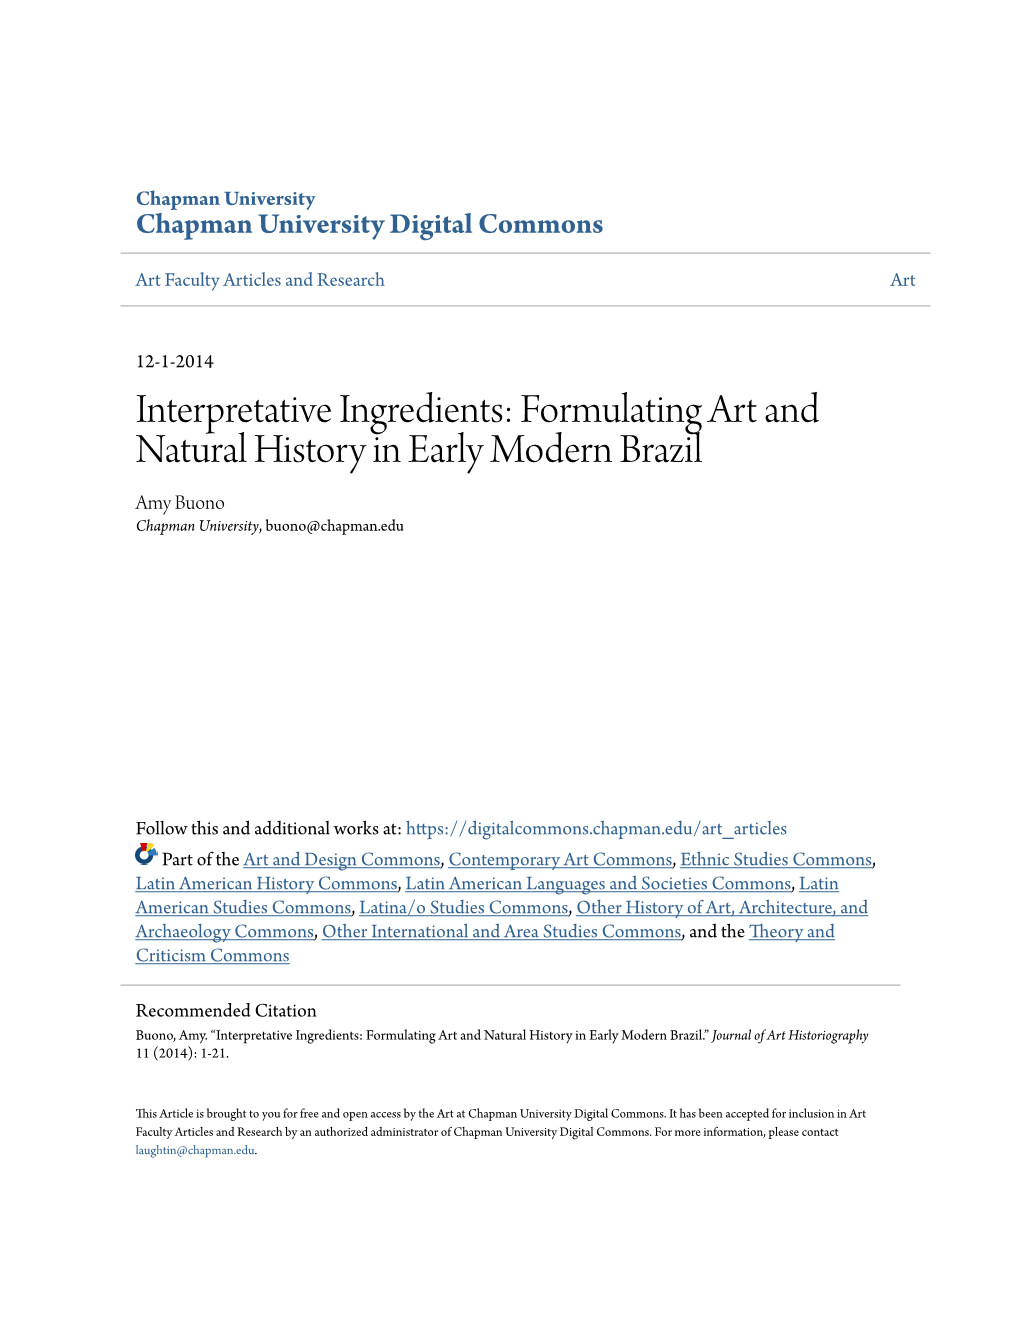 Interpretative Ingredients: Formulating Art and Natural History in Early Modern Brazil Amy Buono Chapman University, Buono@Chapman.Edu